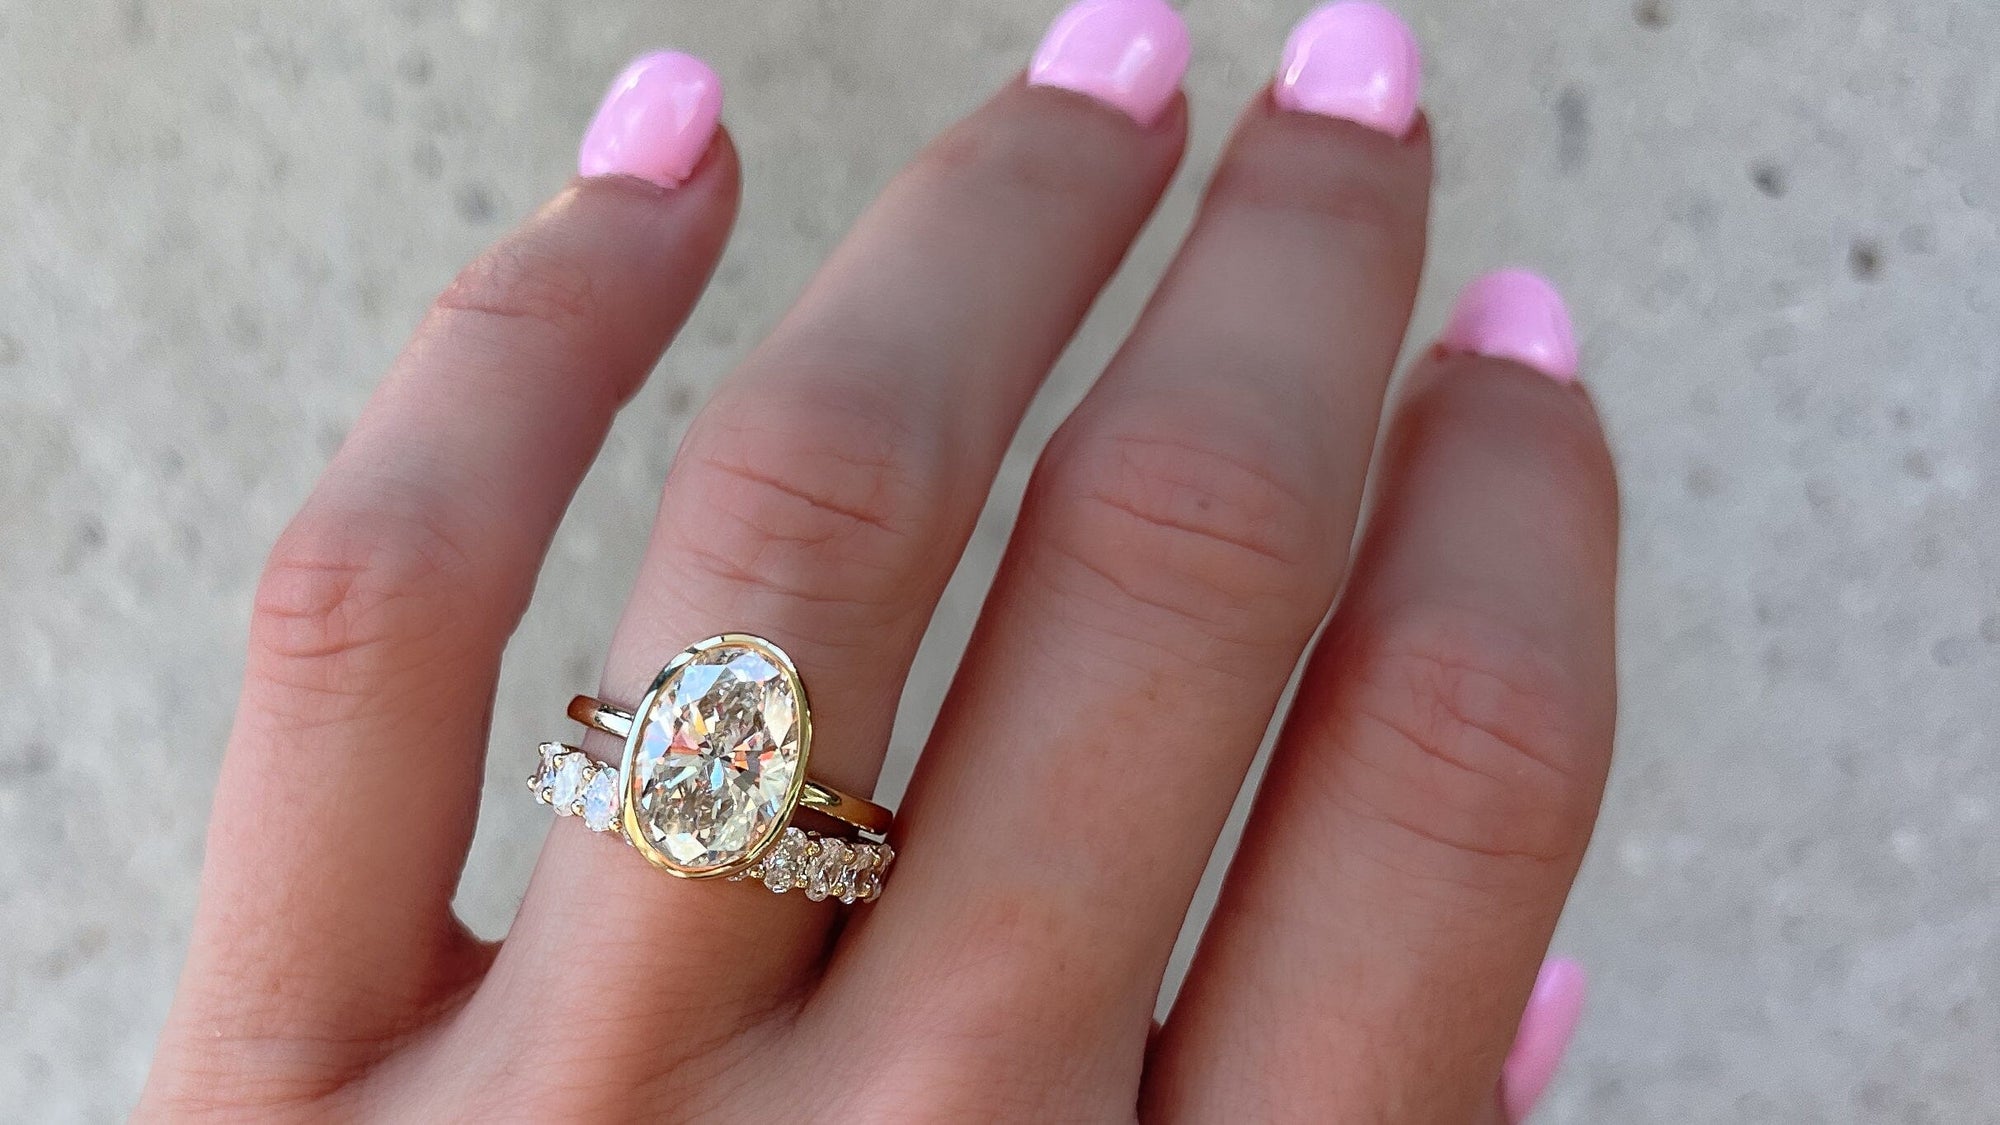 Design Your Own Unique Engagement Ring - Brilliant Earth